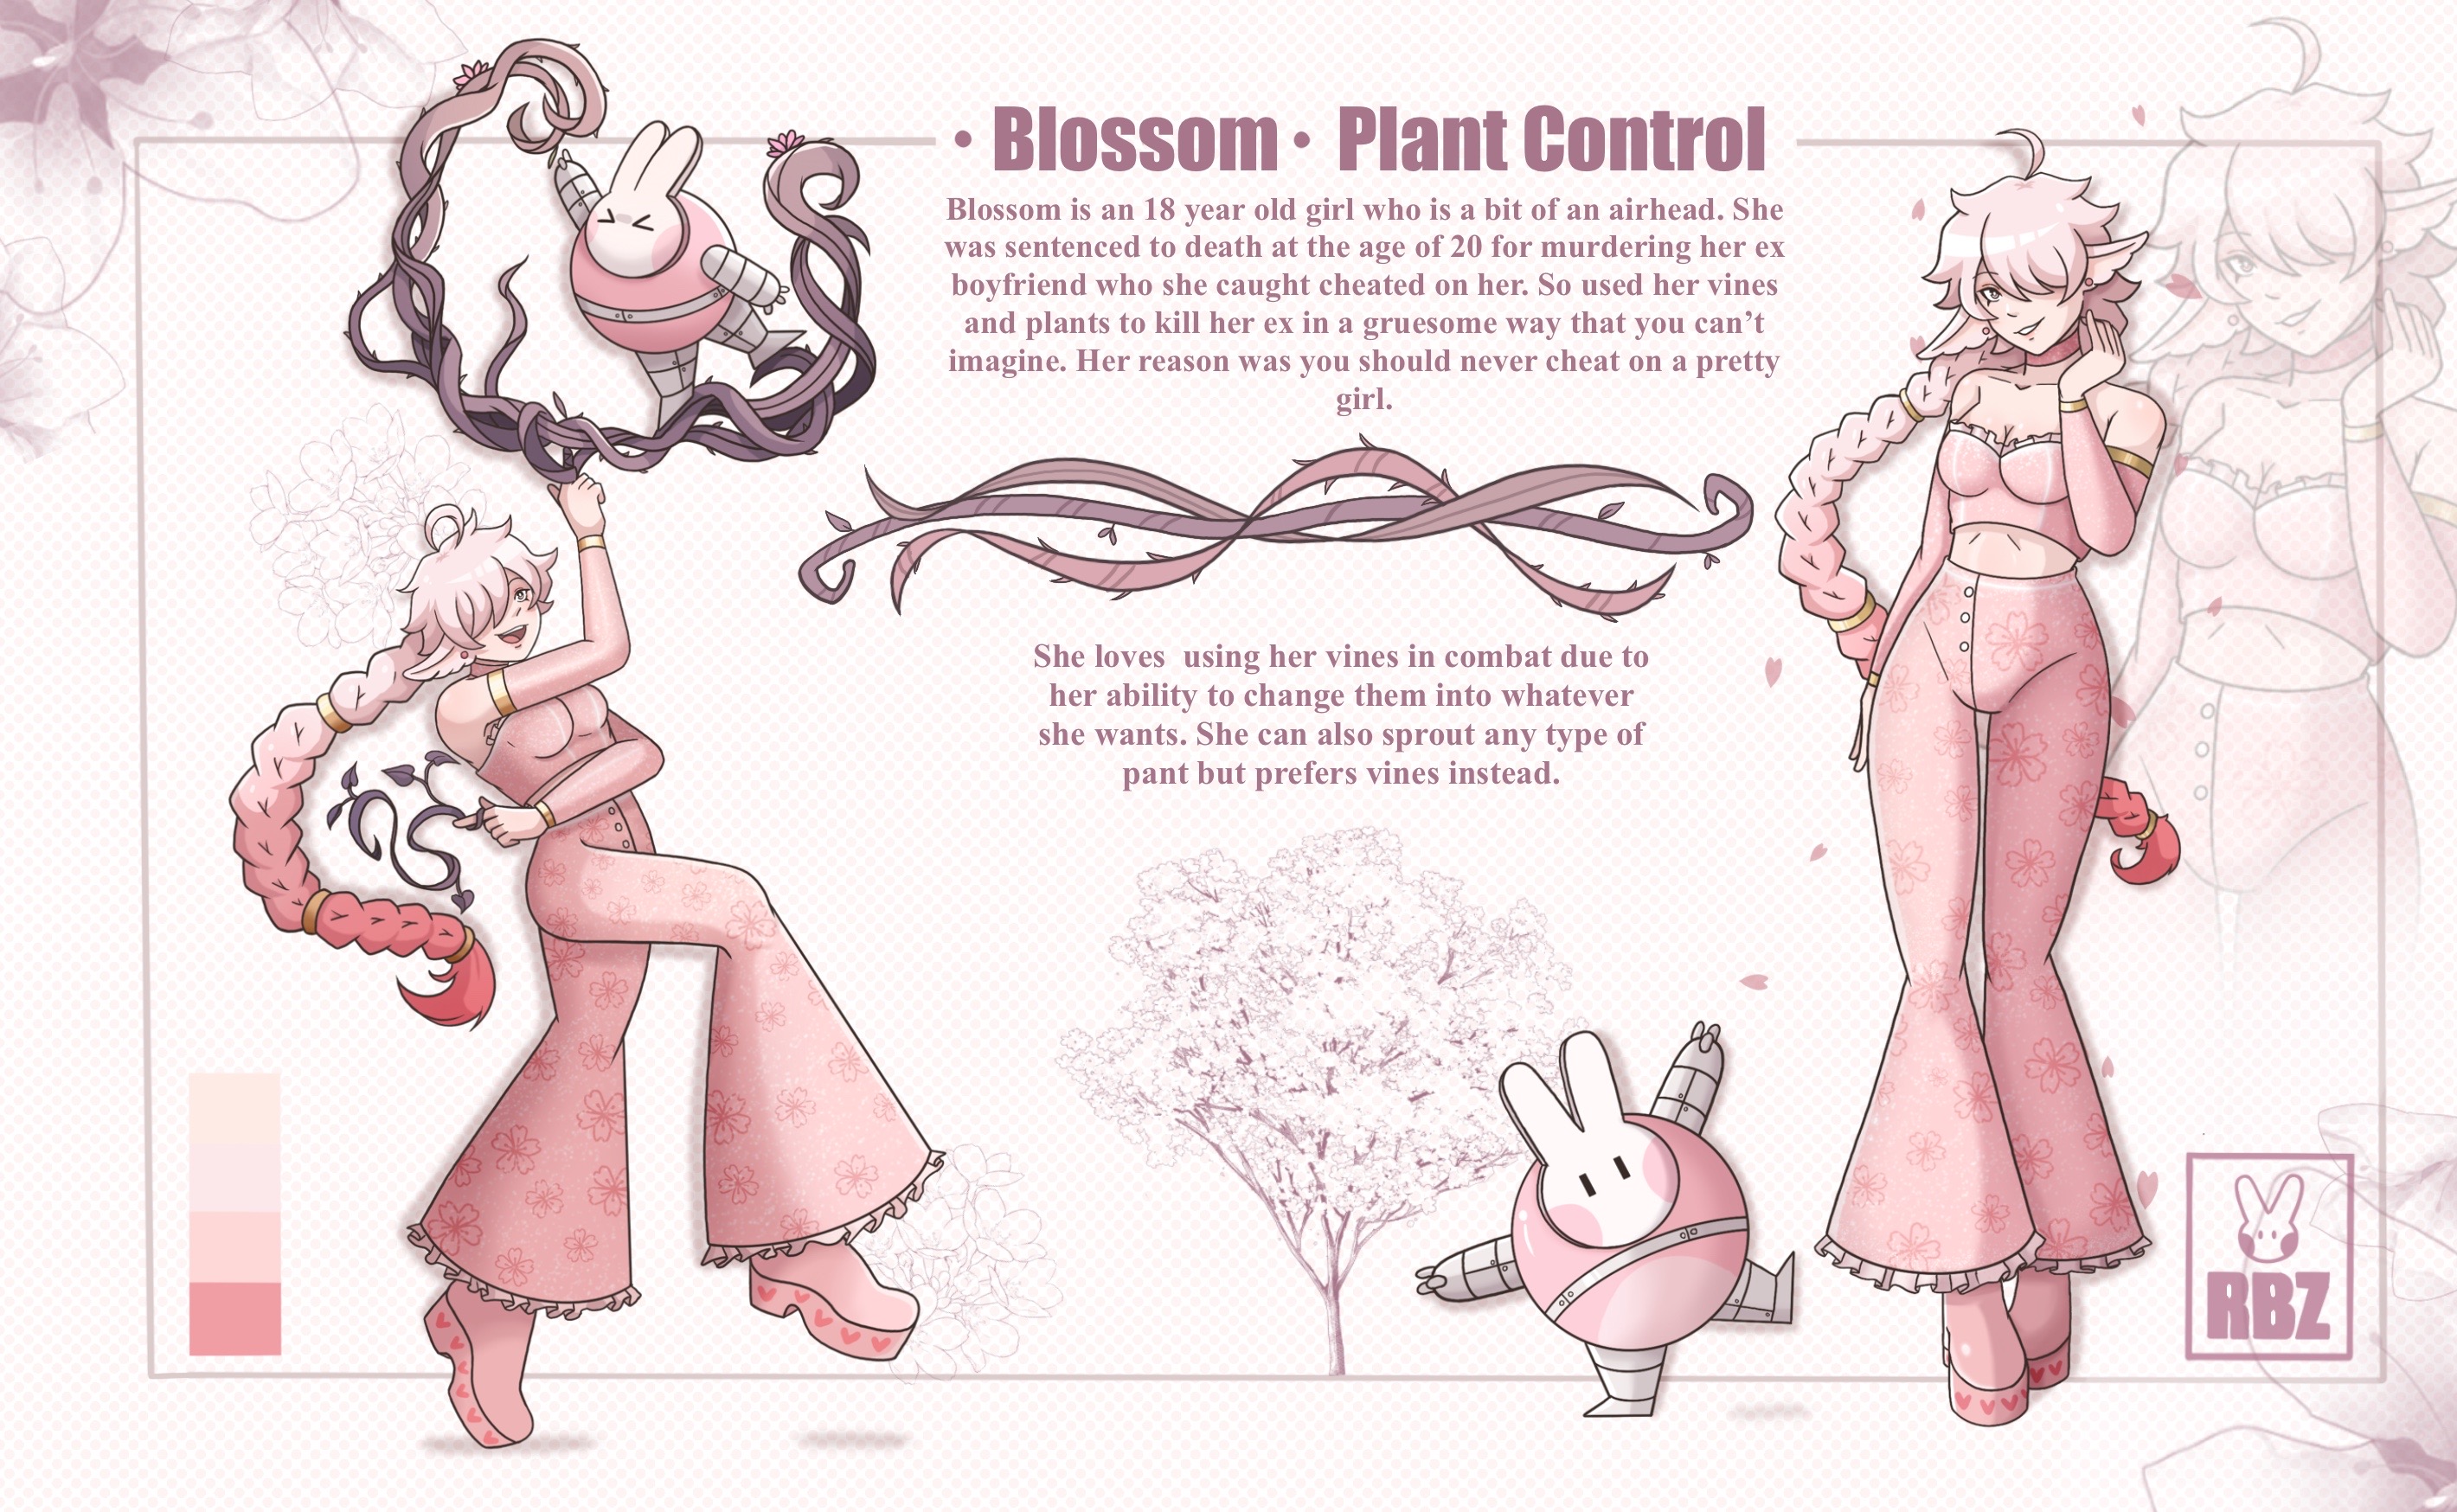 R.B.Z Hero's Blossom Character Sheet